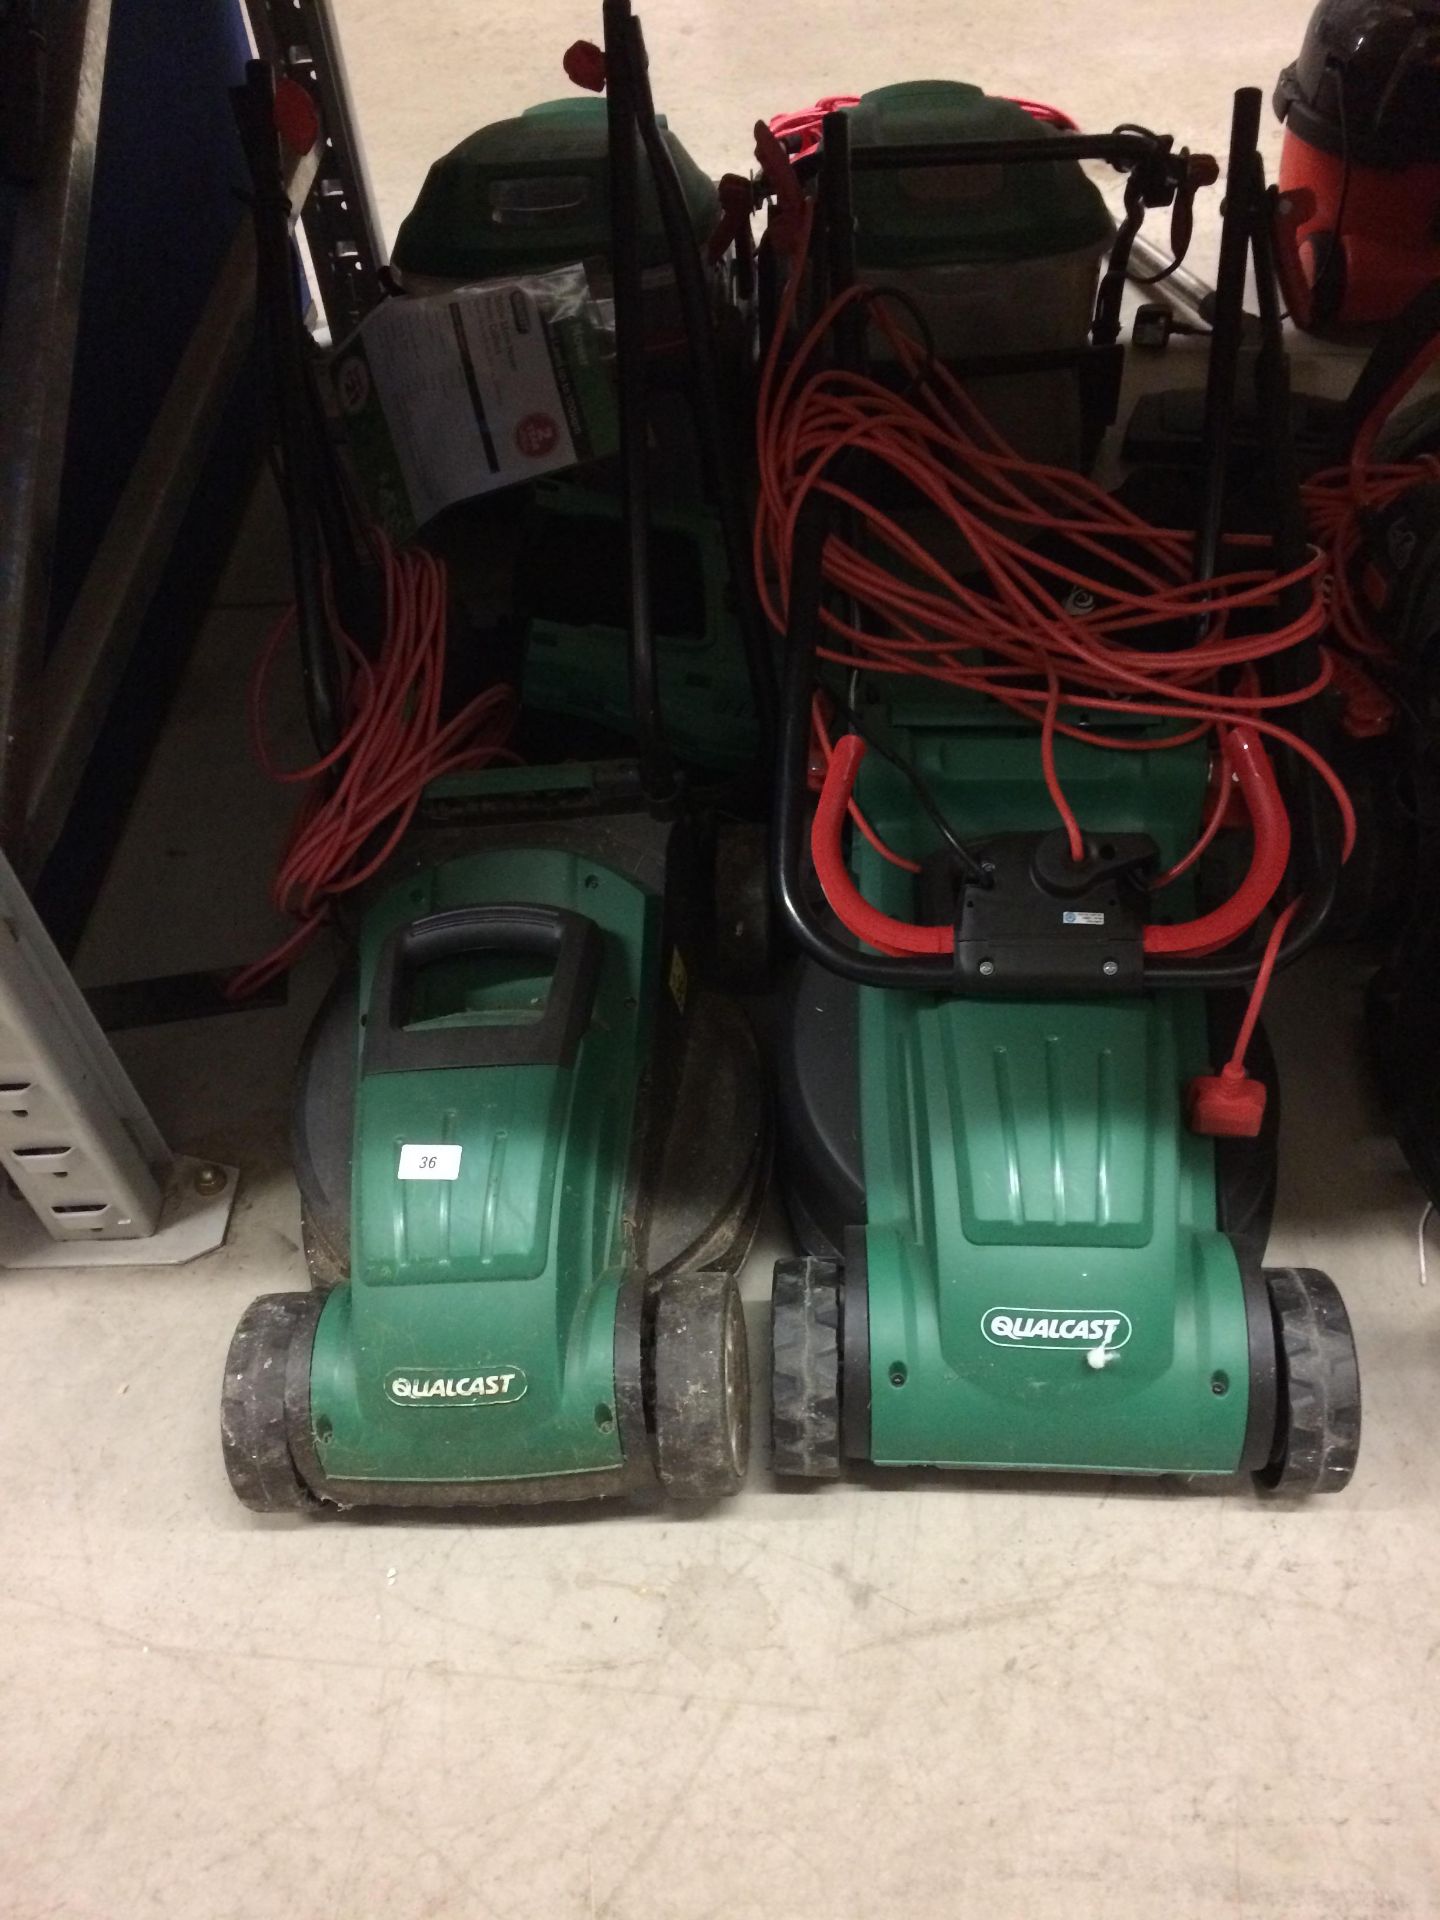 2 x Qualcast electric lawnmowers